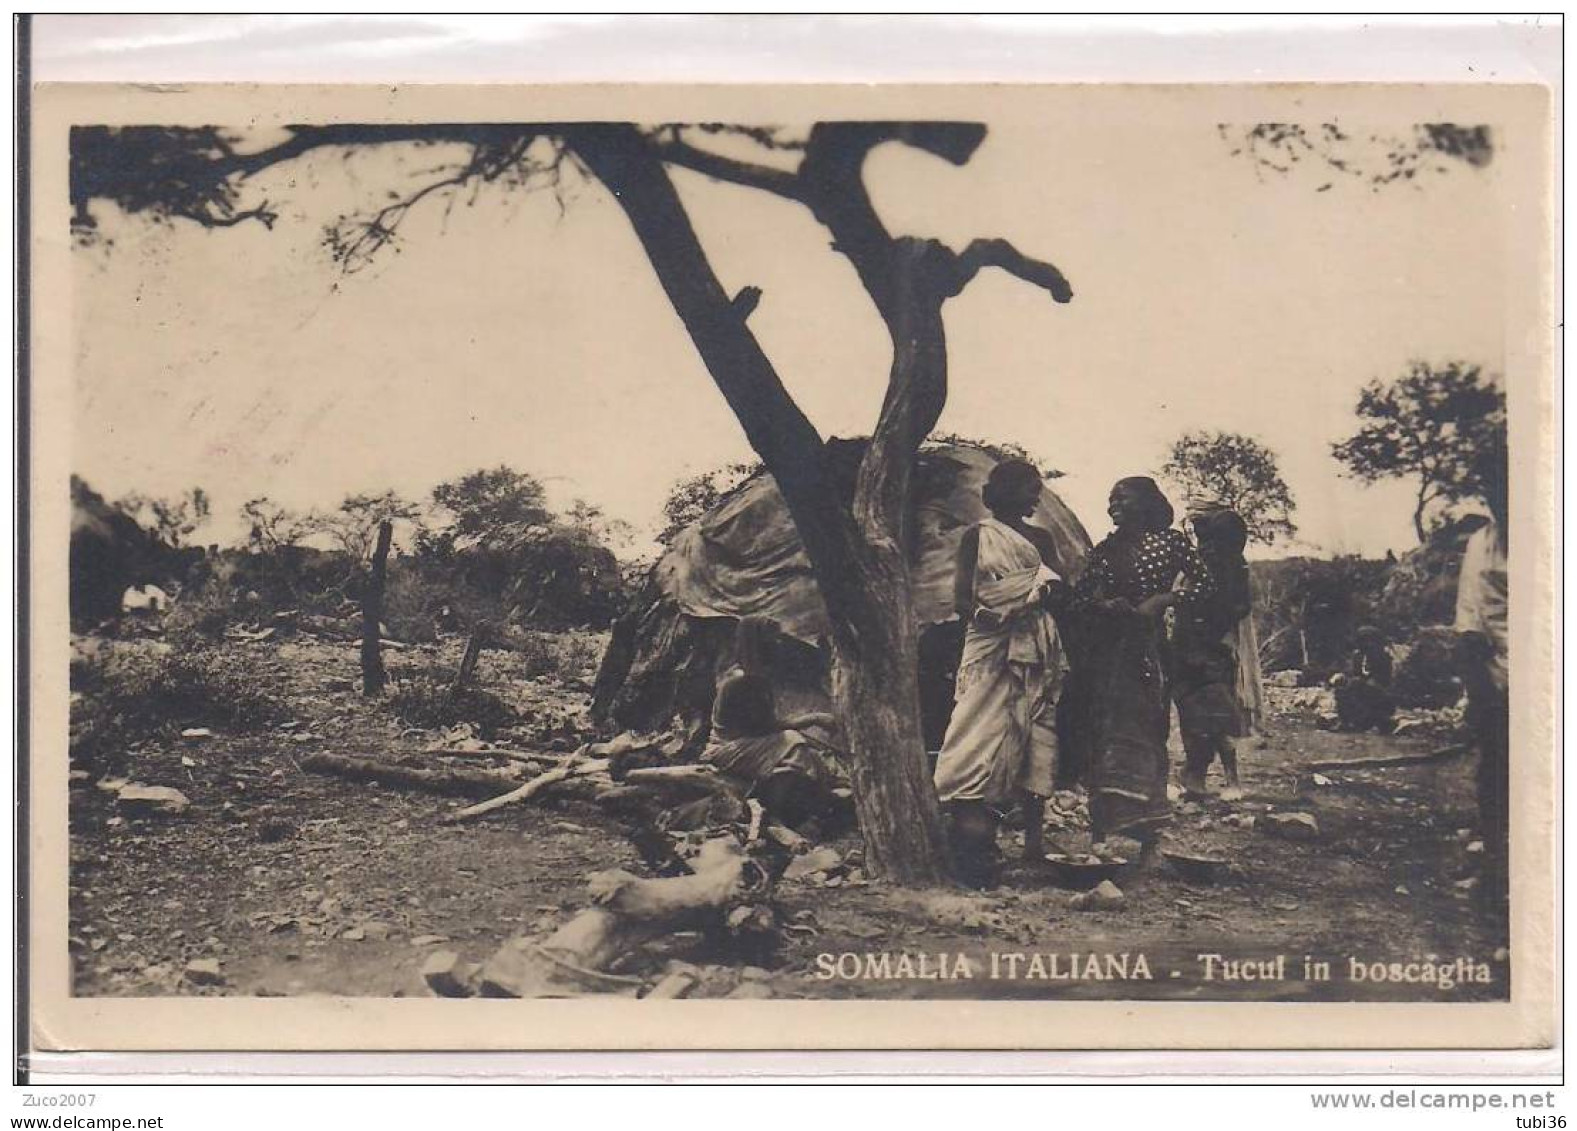 SOMALIA  ITALIANA - TUCUL  IN BOSCAGLIA  - B/N VIAGGIATA  2/11/1930 - TIMBRO POSTE MOGADISCIO - Somalie